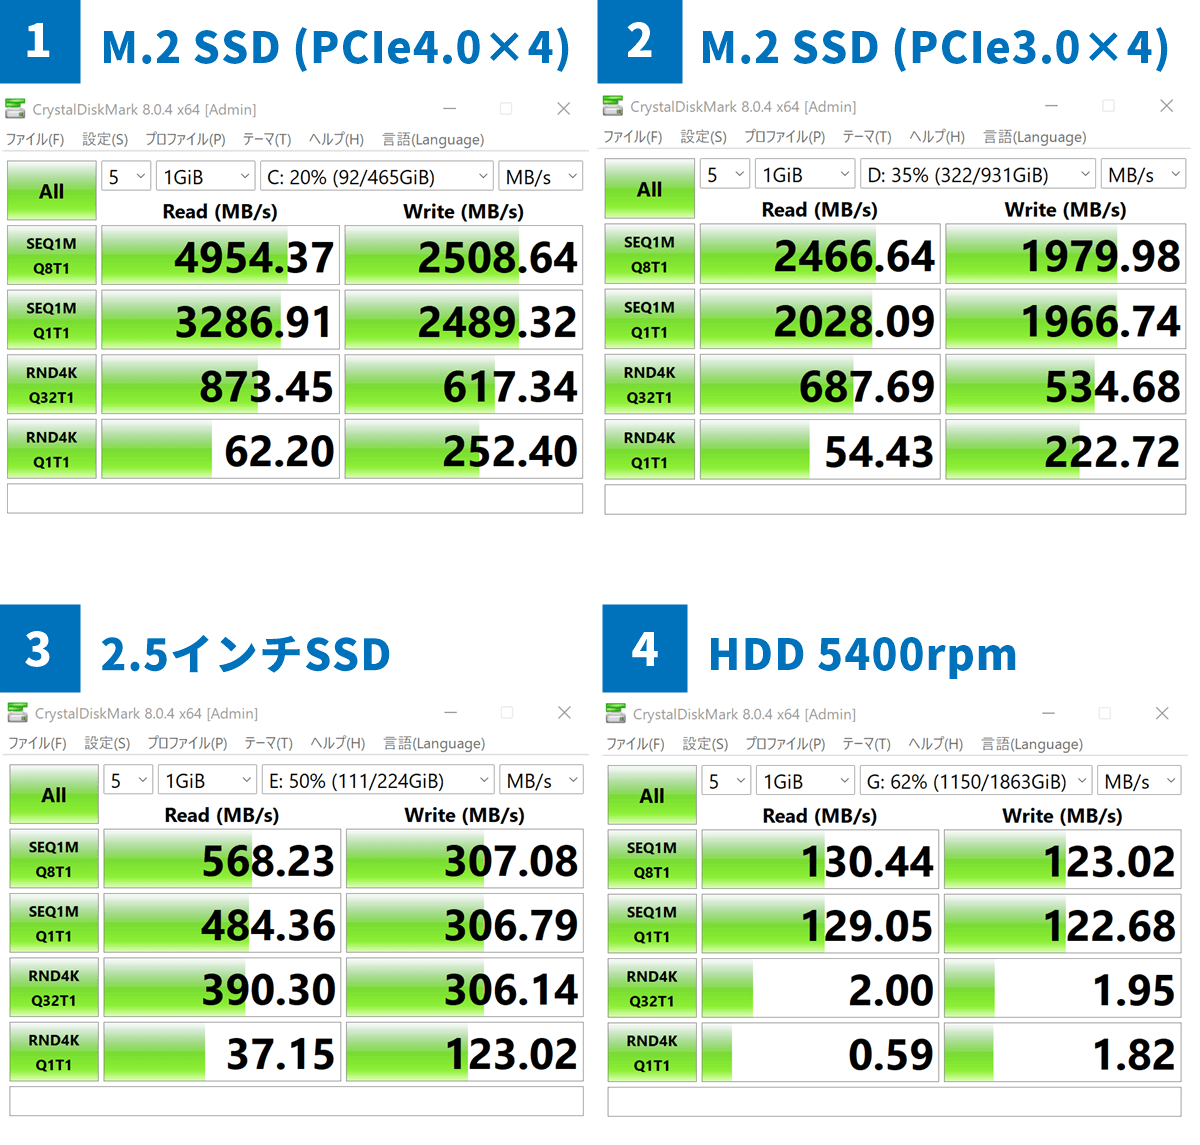 M.2 SSD PCIe4.0と3.0、2.5インチSSD、3.5インチHDD 5400rpmの転送速度を比較